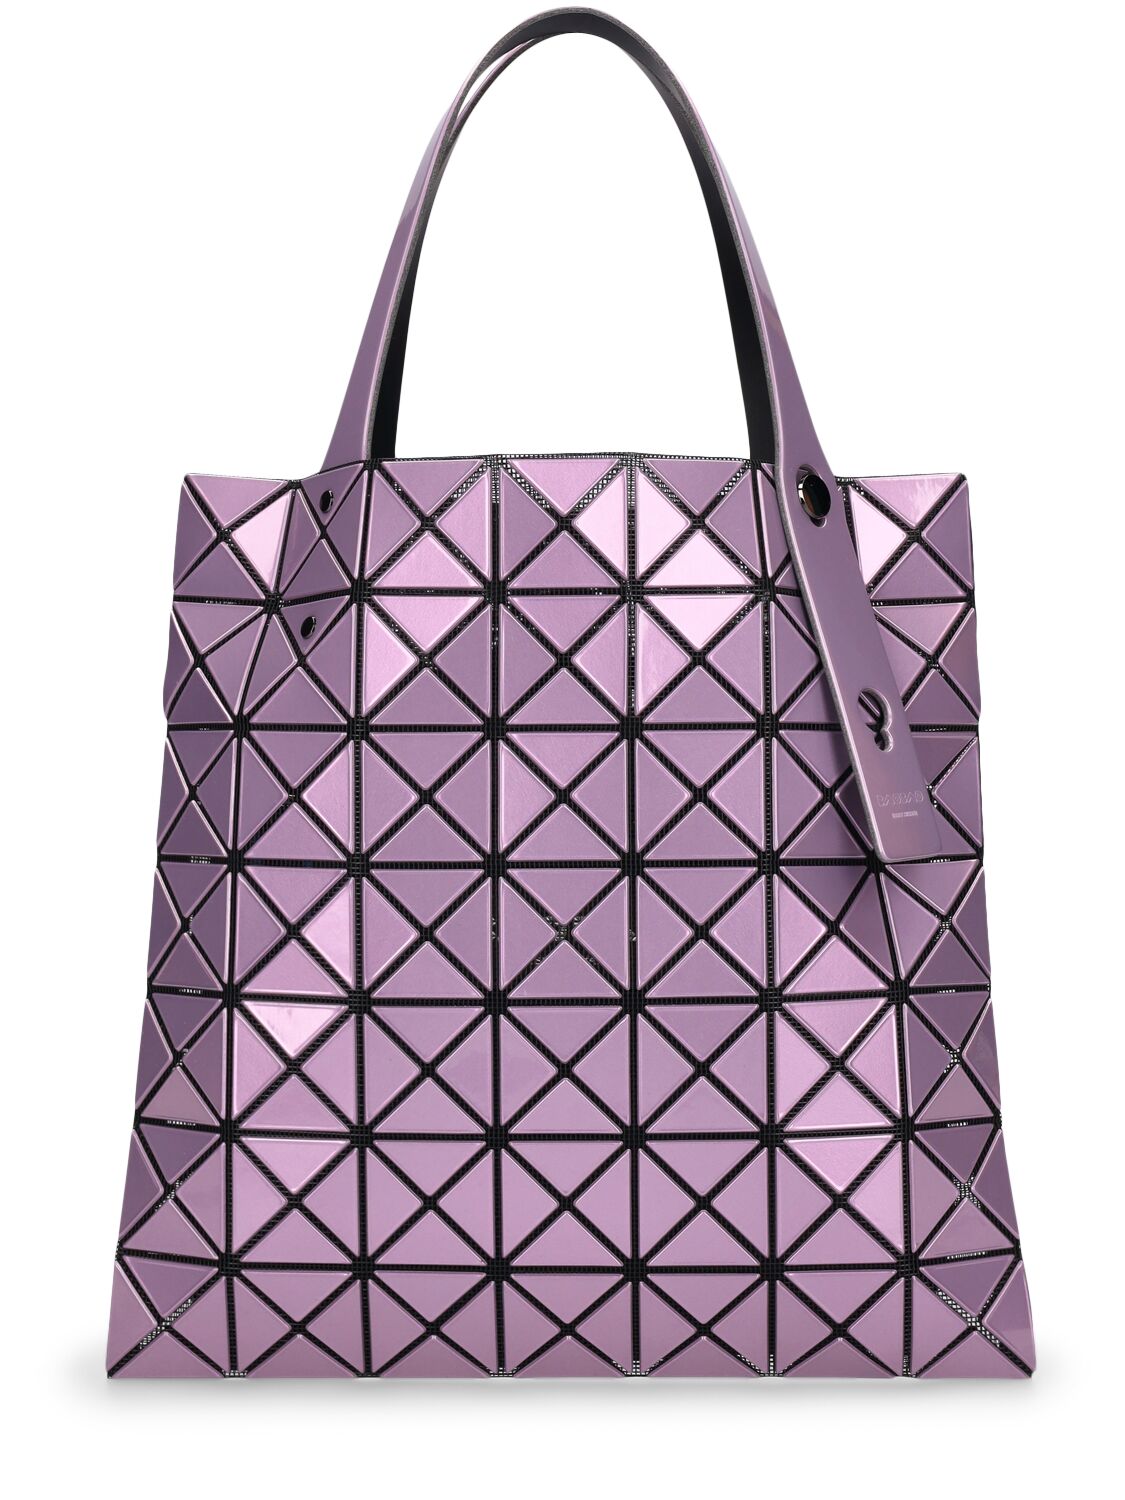 Image of Prism Metallic Tote Bag